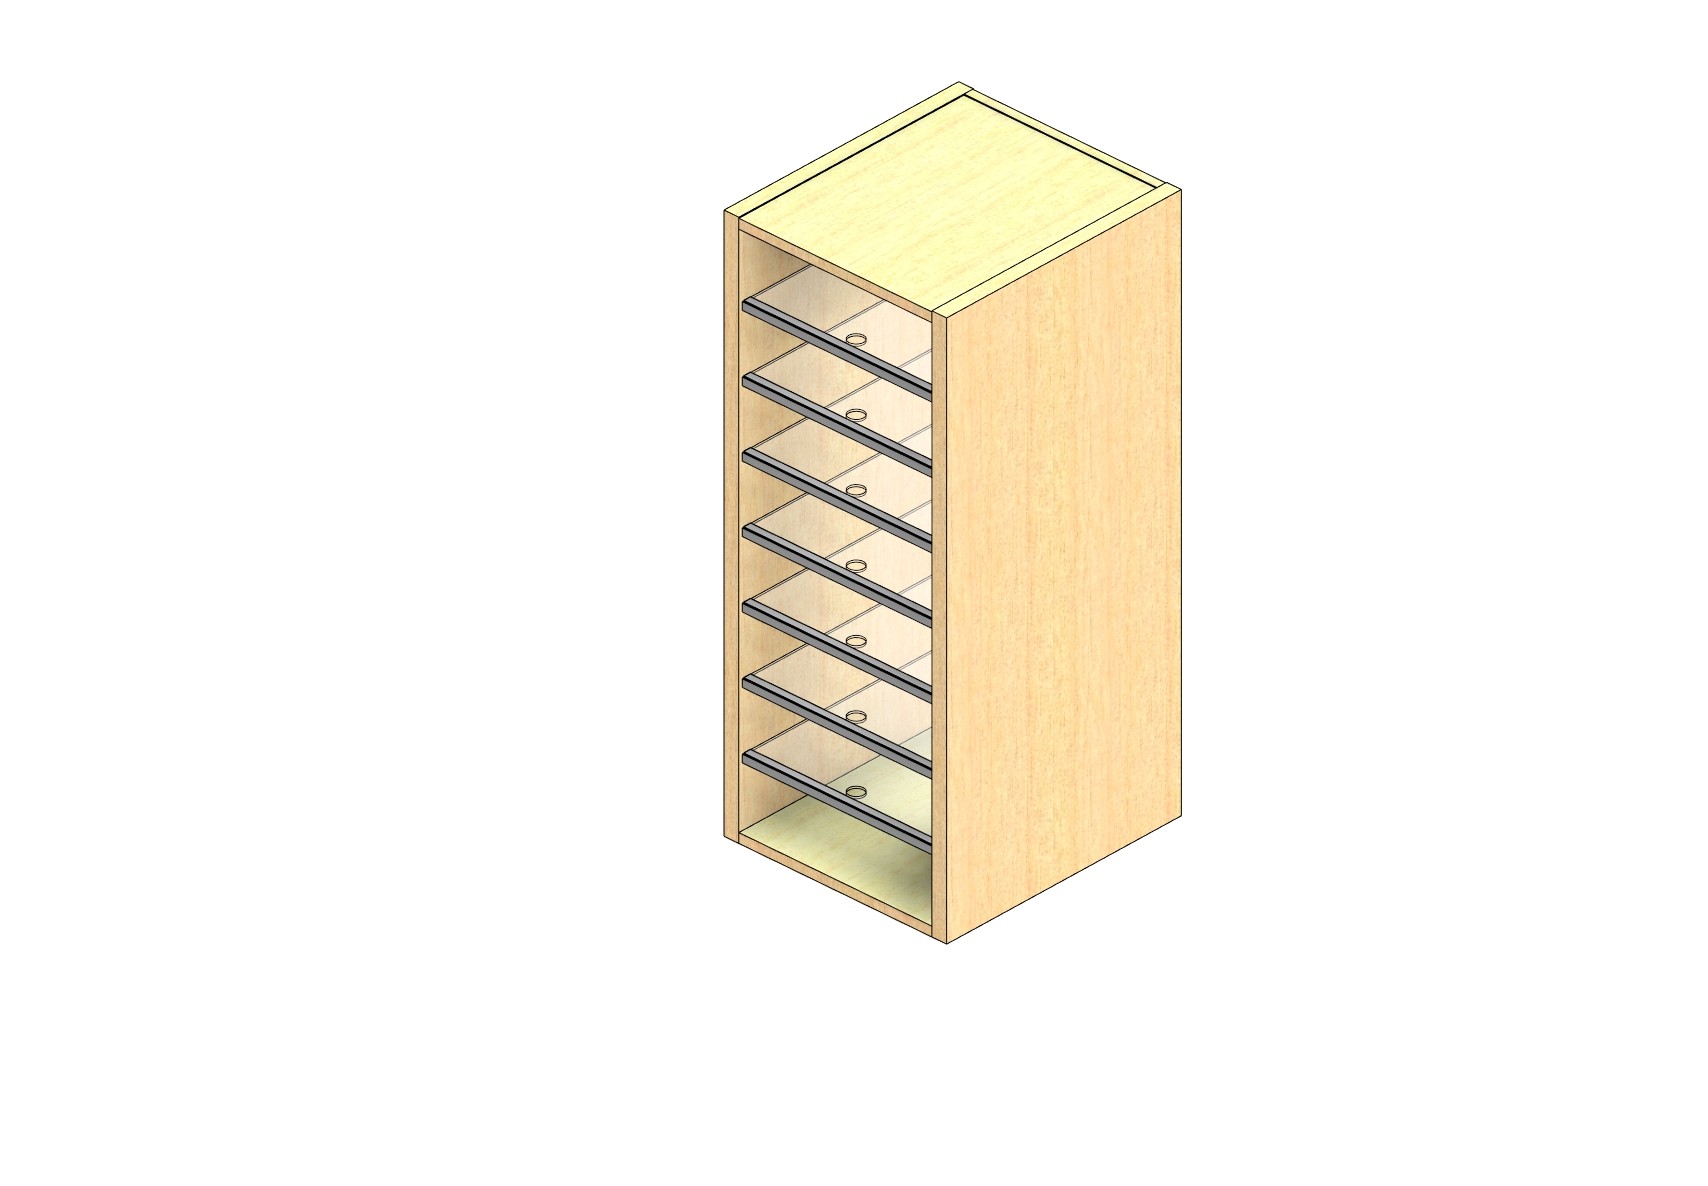 Oversize Sized Open Back Sort Module - 1 Column - 36" Sorting Height w/ No Riser